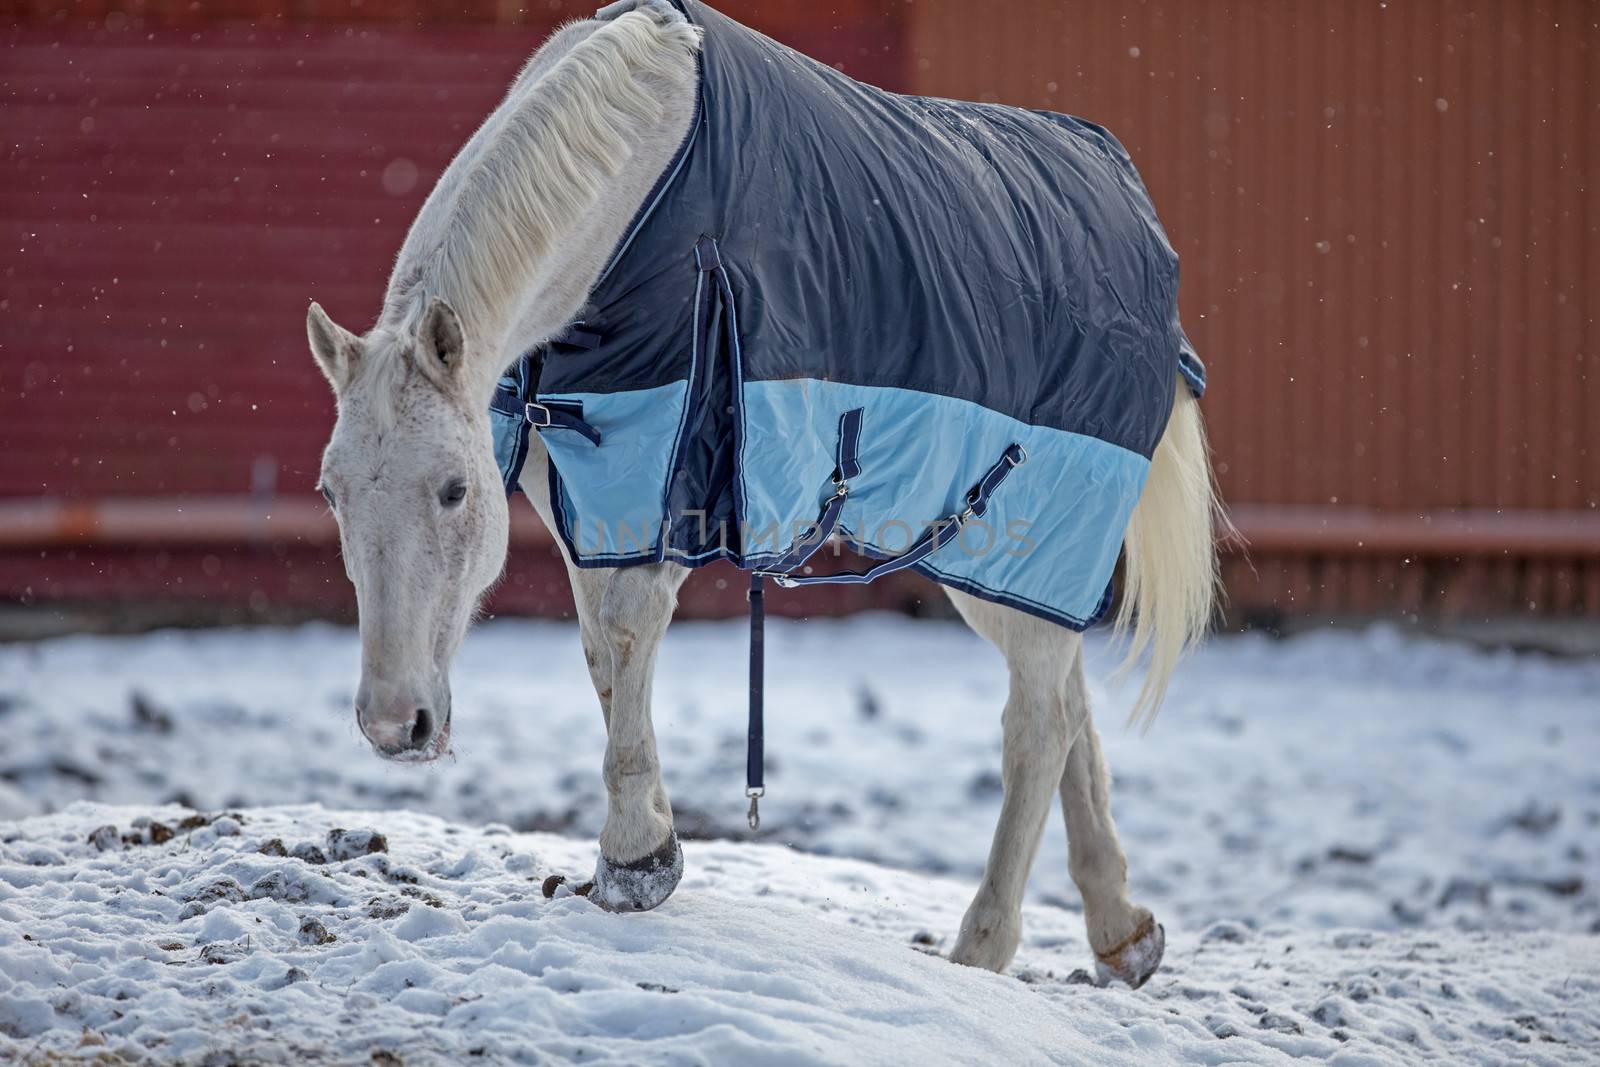 Horse ouside in blanket